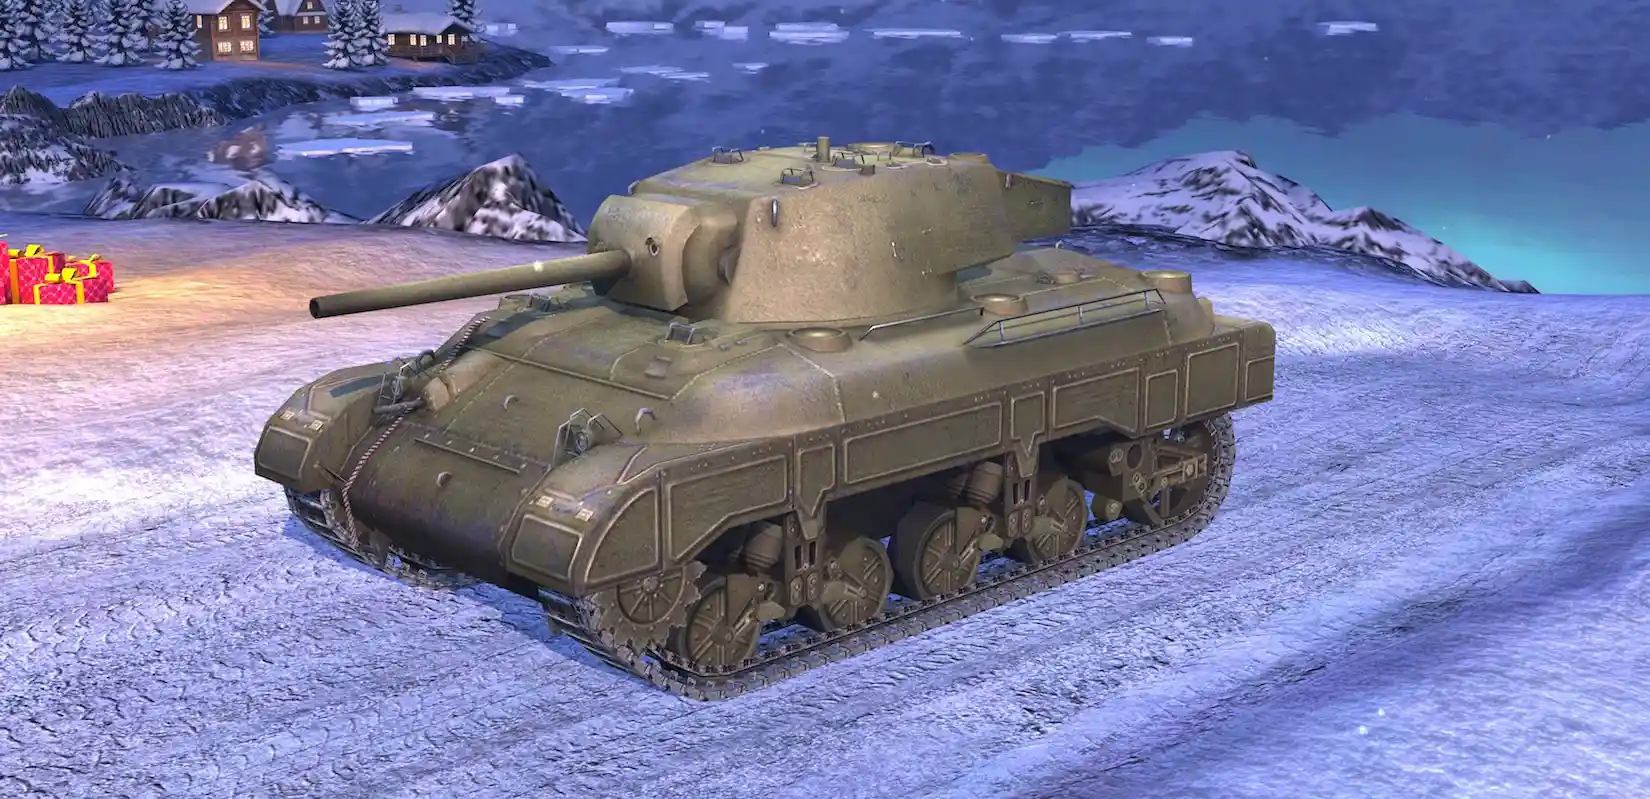 M7 - World of Tanks Blitz Wiki*